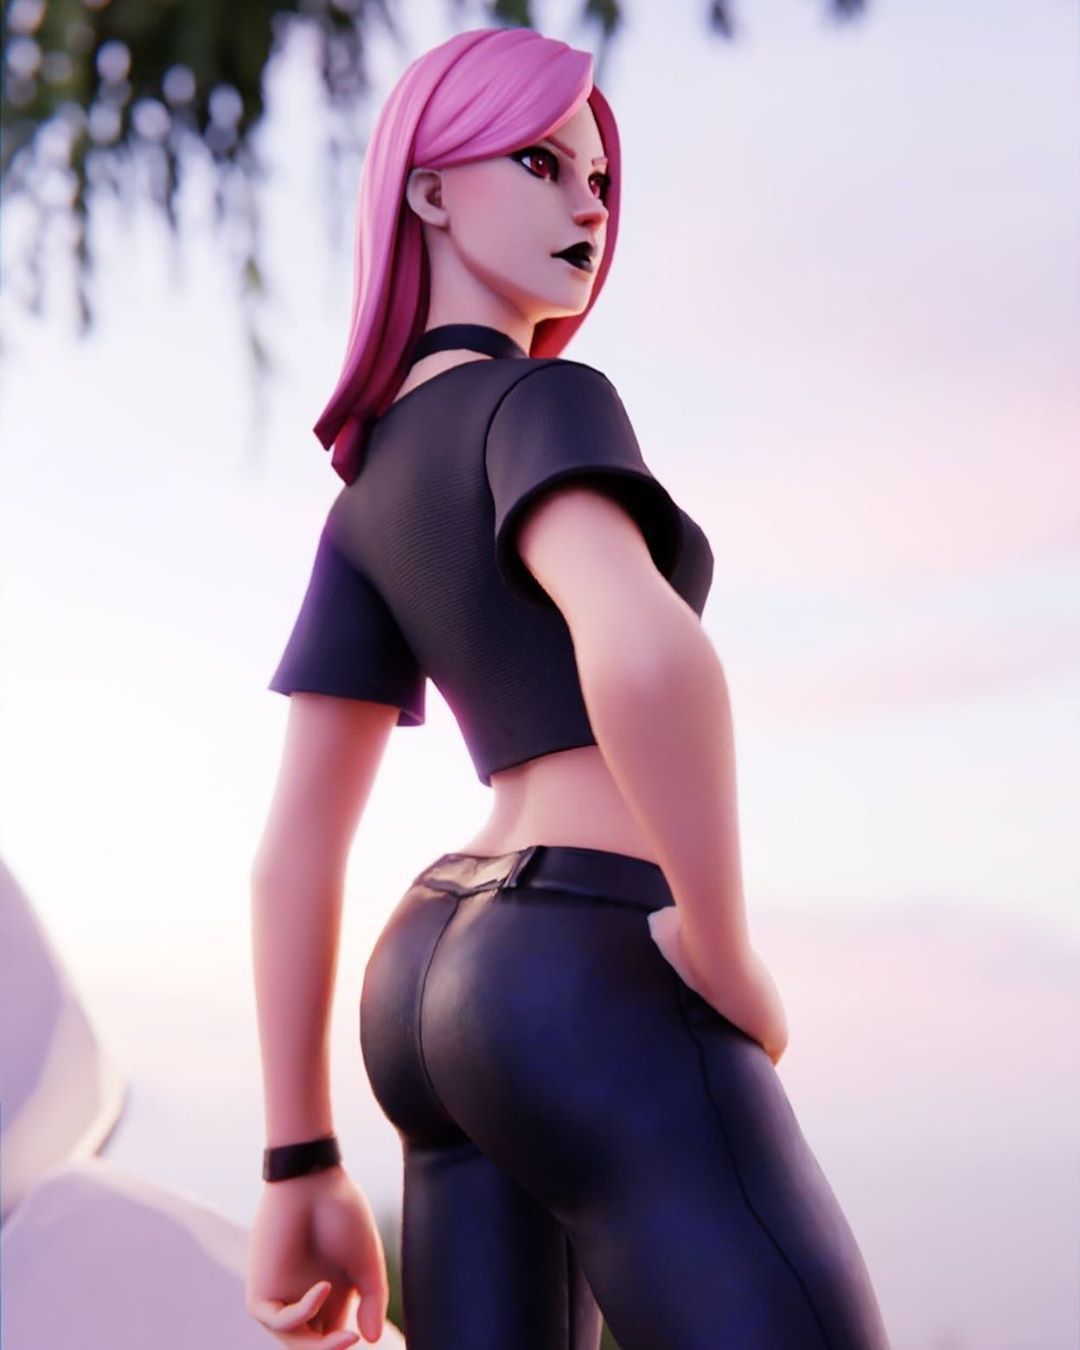 General 1080x1350 Fortnite PC gaming video game girls pink hair standing black lipstick red eyes ass